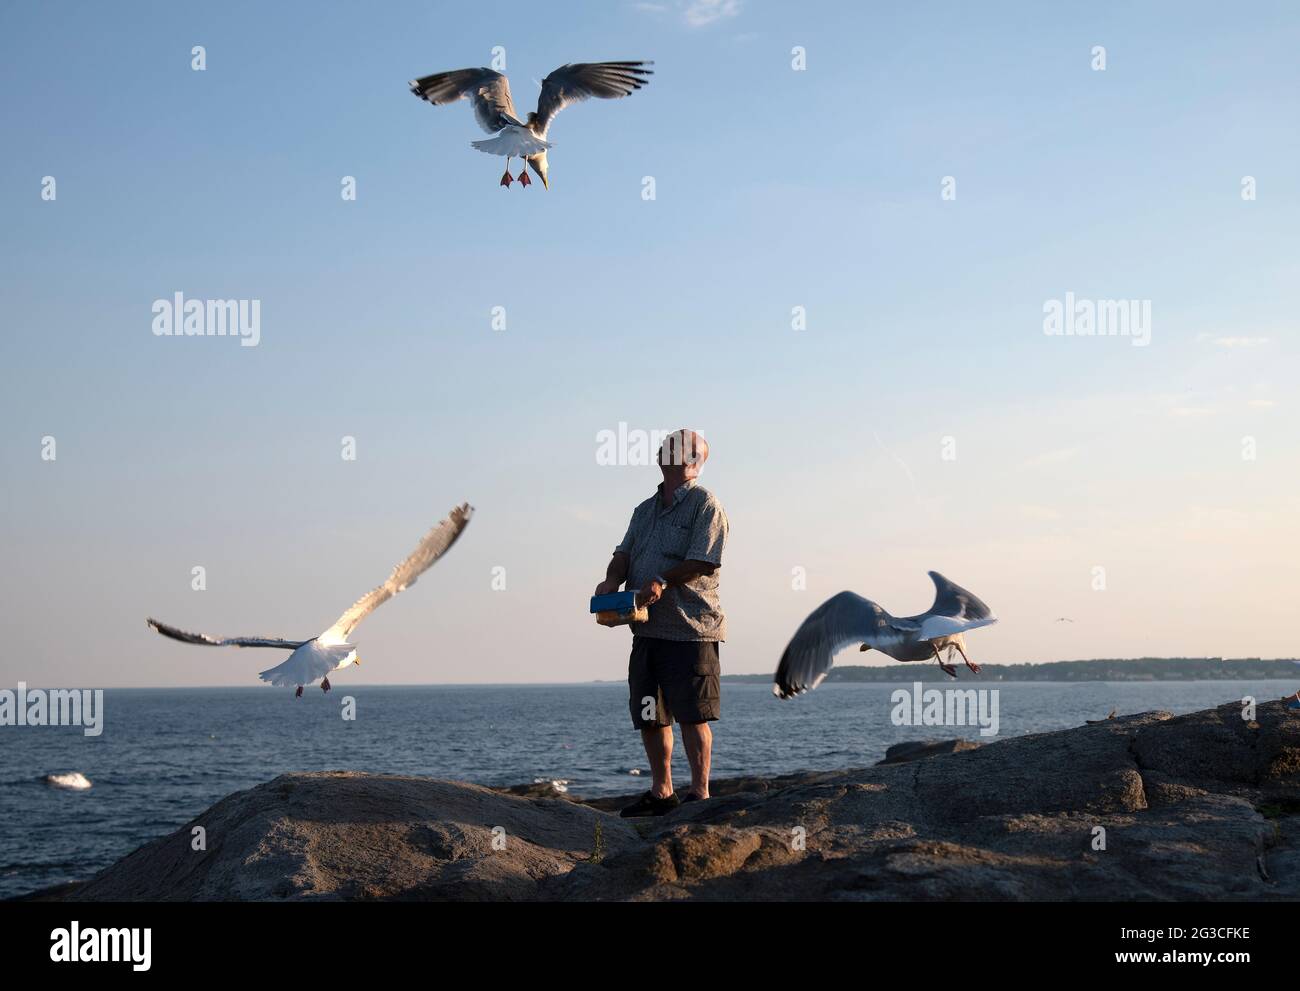 A man  feeding seagulls on the rocks at Cape Neddick, Maine, USA Stock Photo